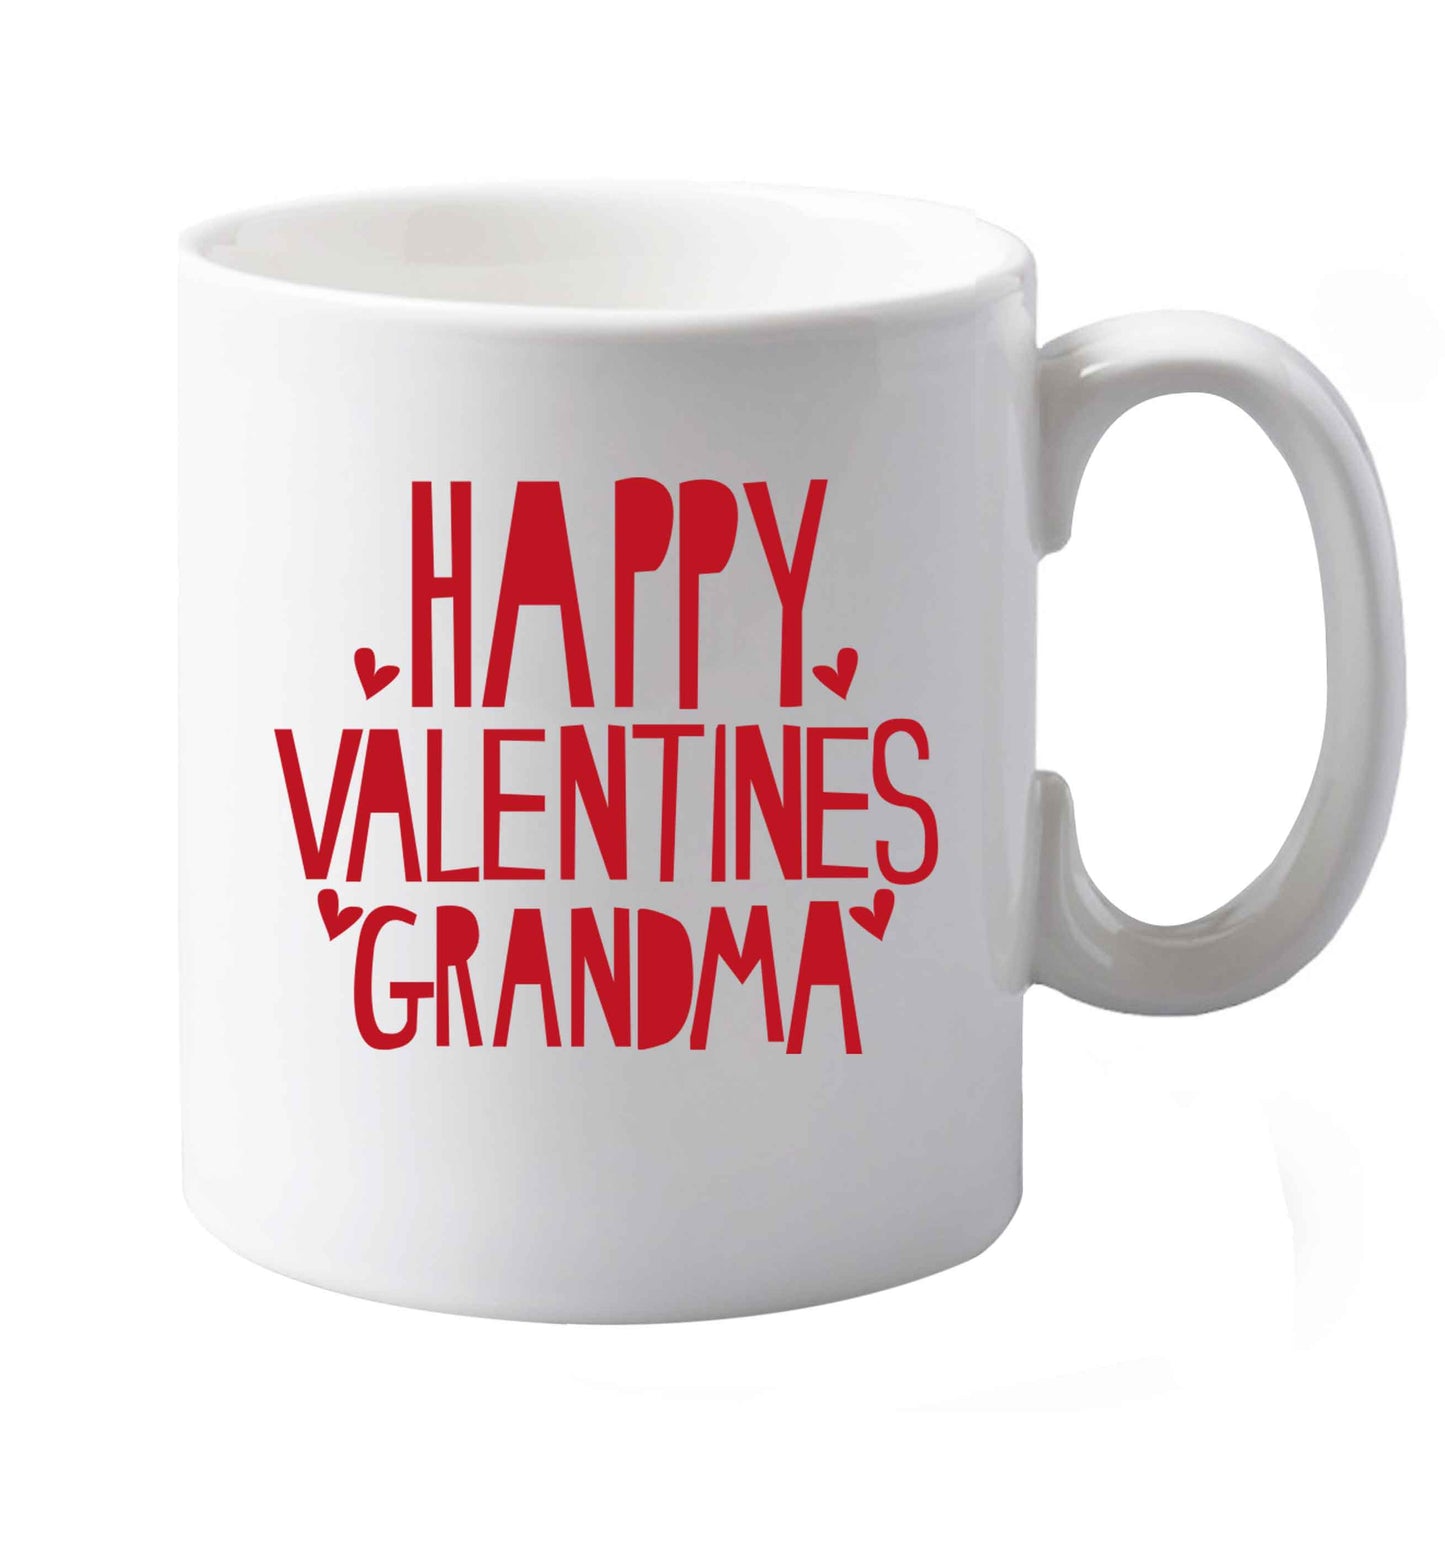 10 oz Happy valentines grandma ceramic mug both sides